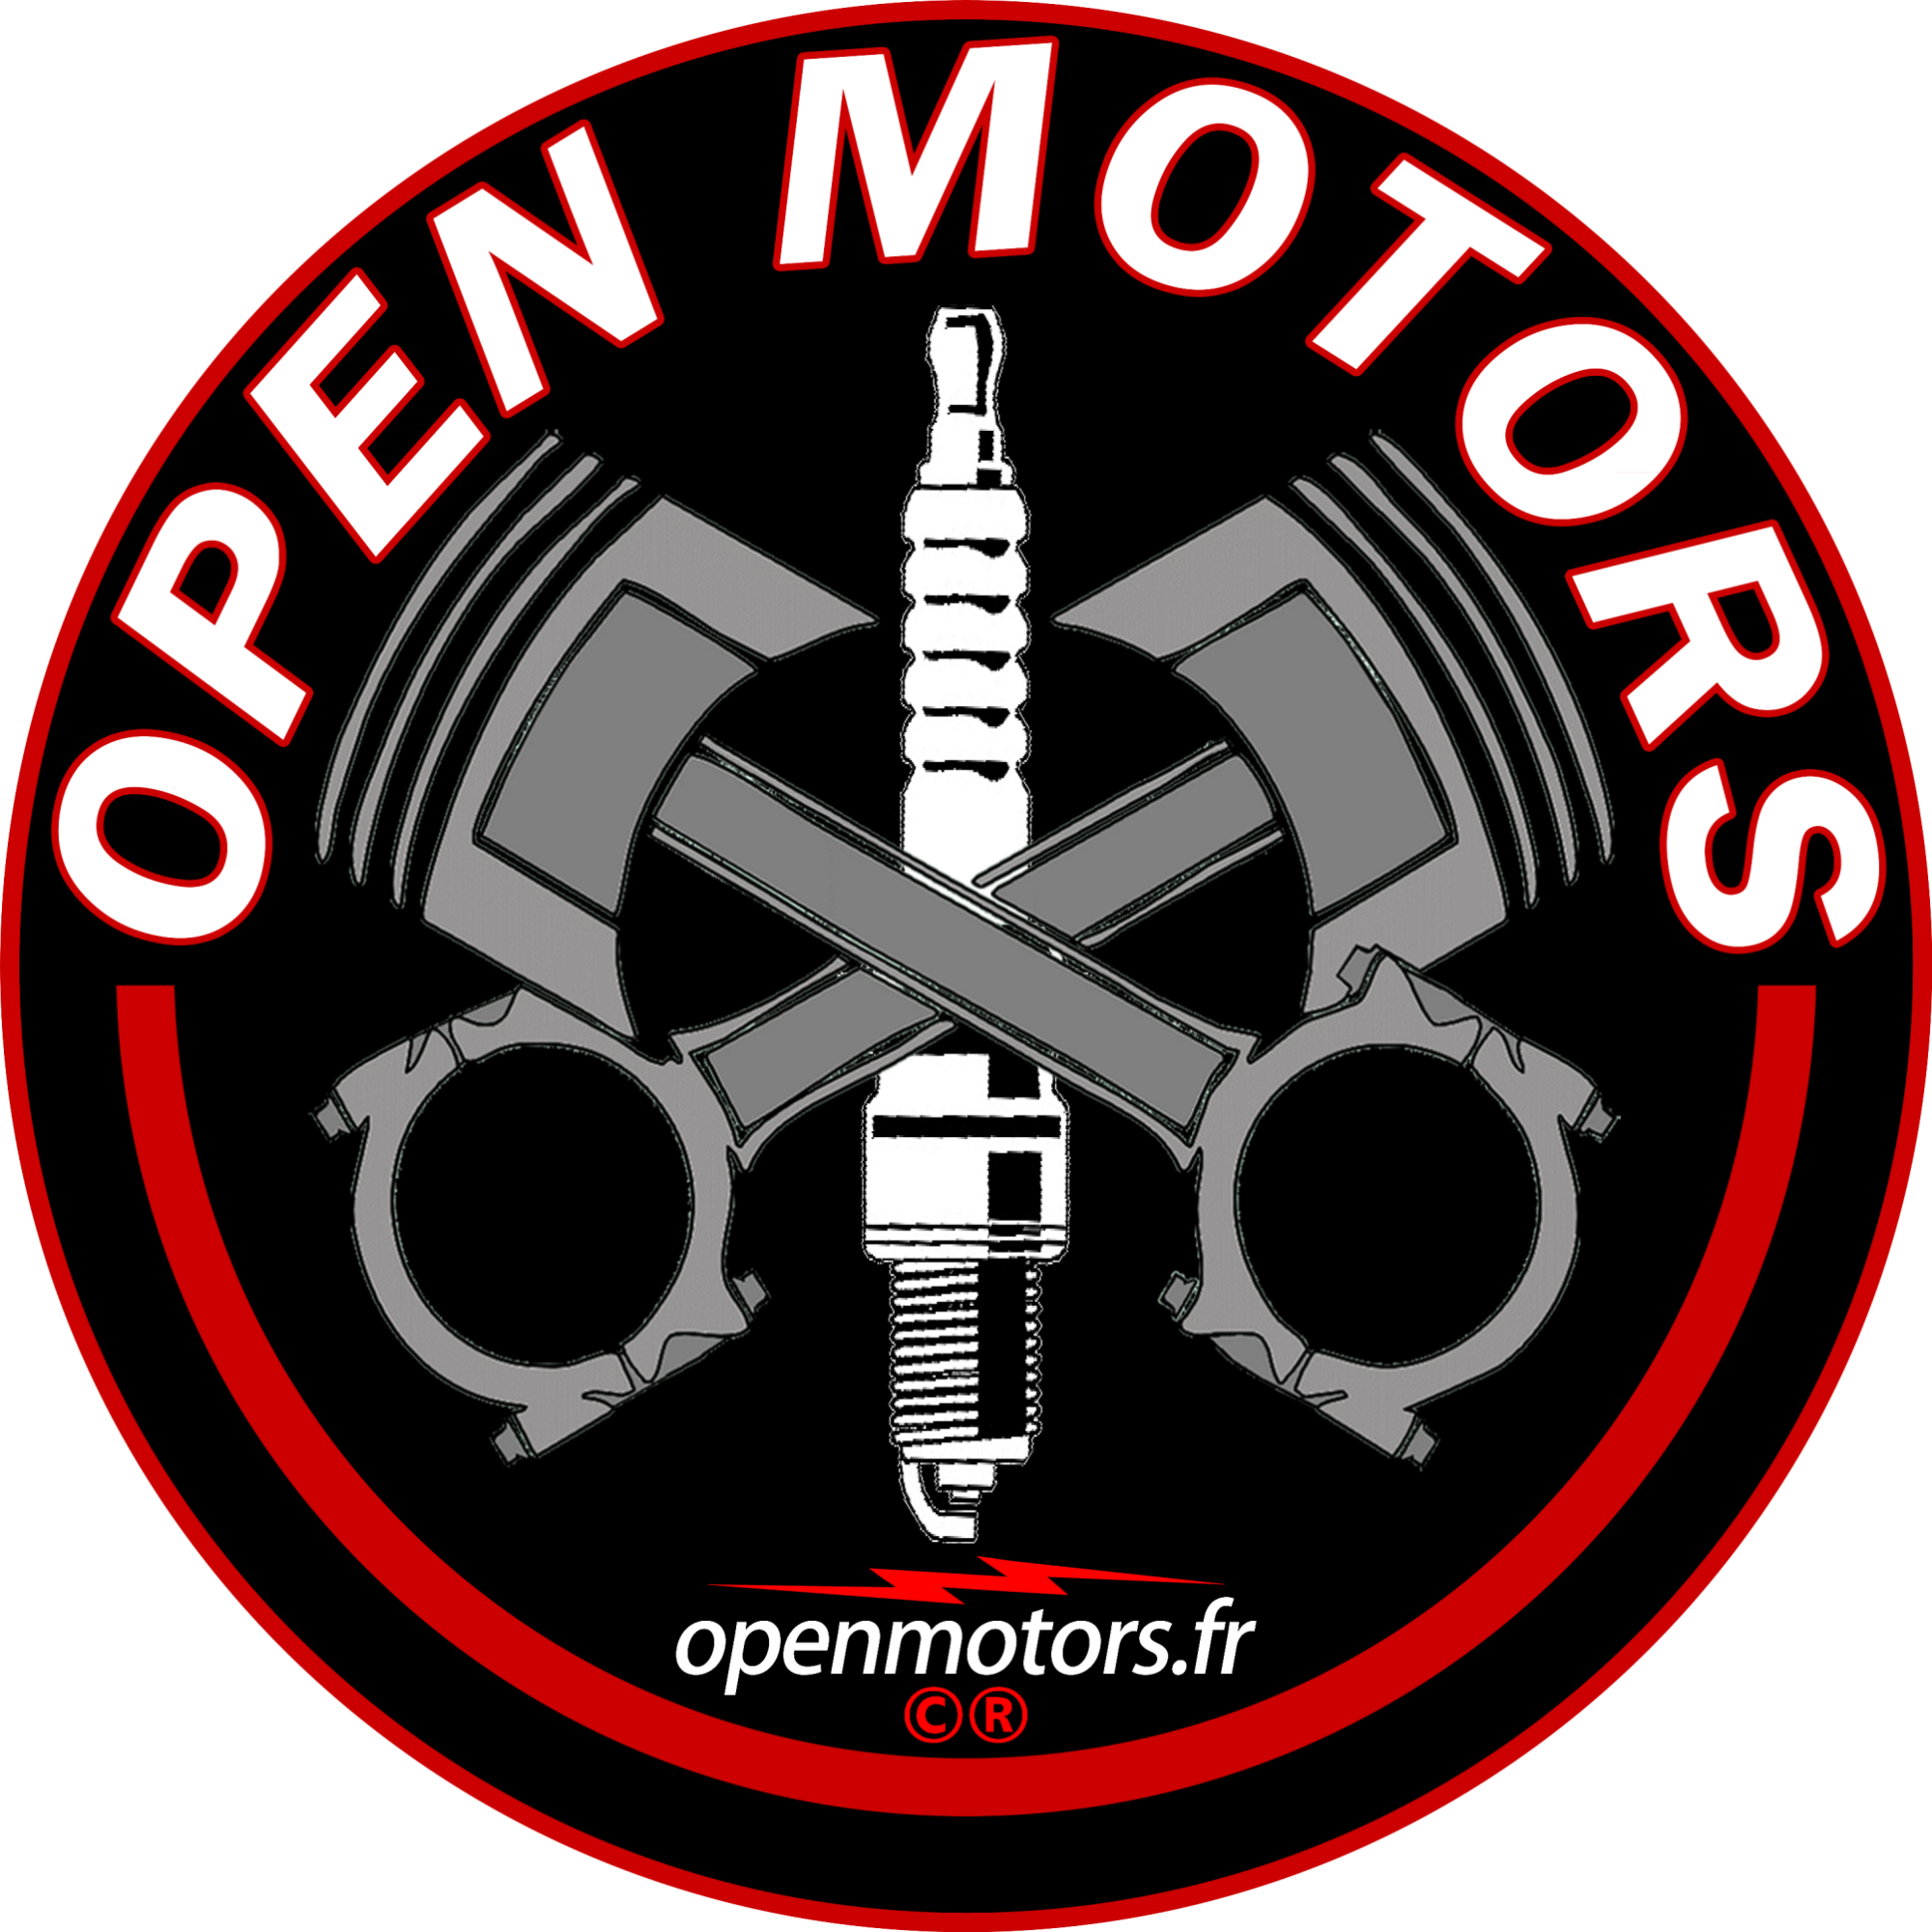 openmotors.fr-Bienvenue-Welcome